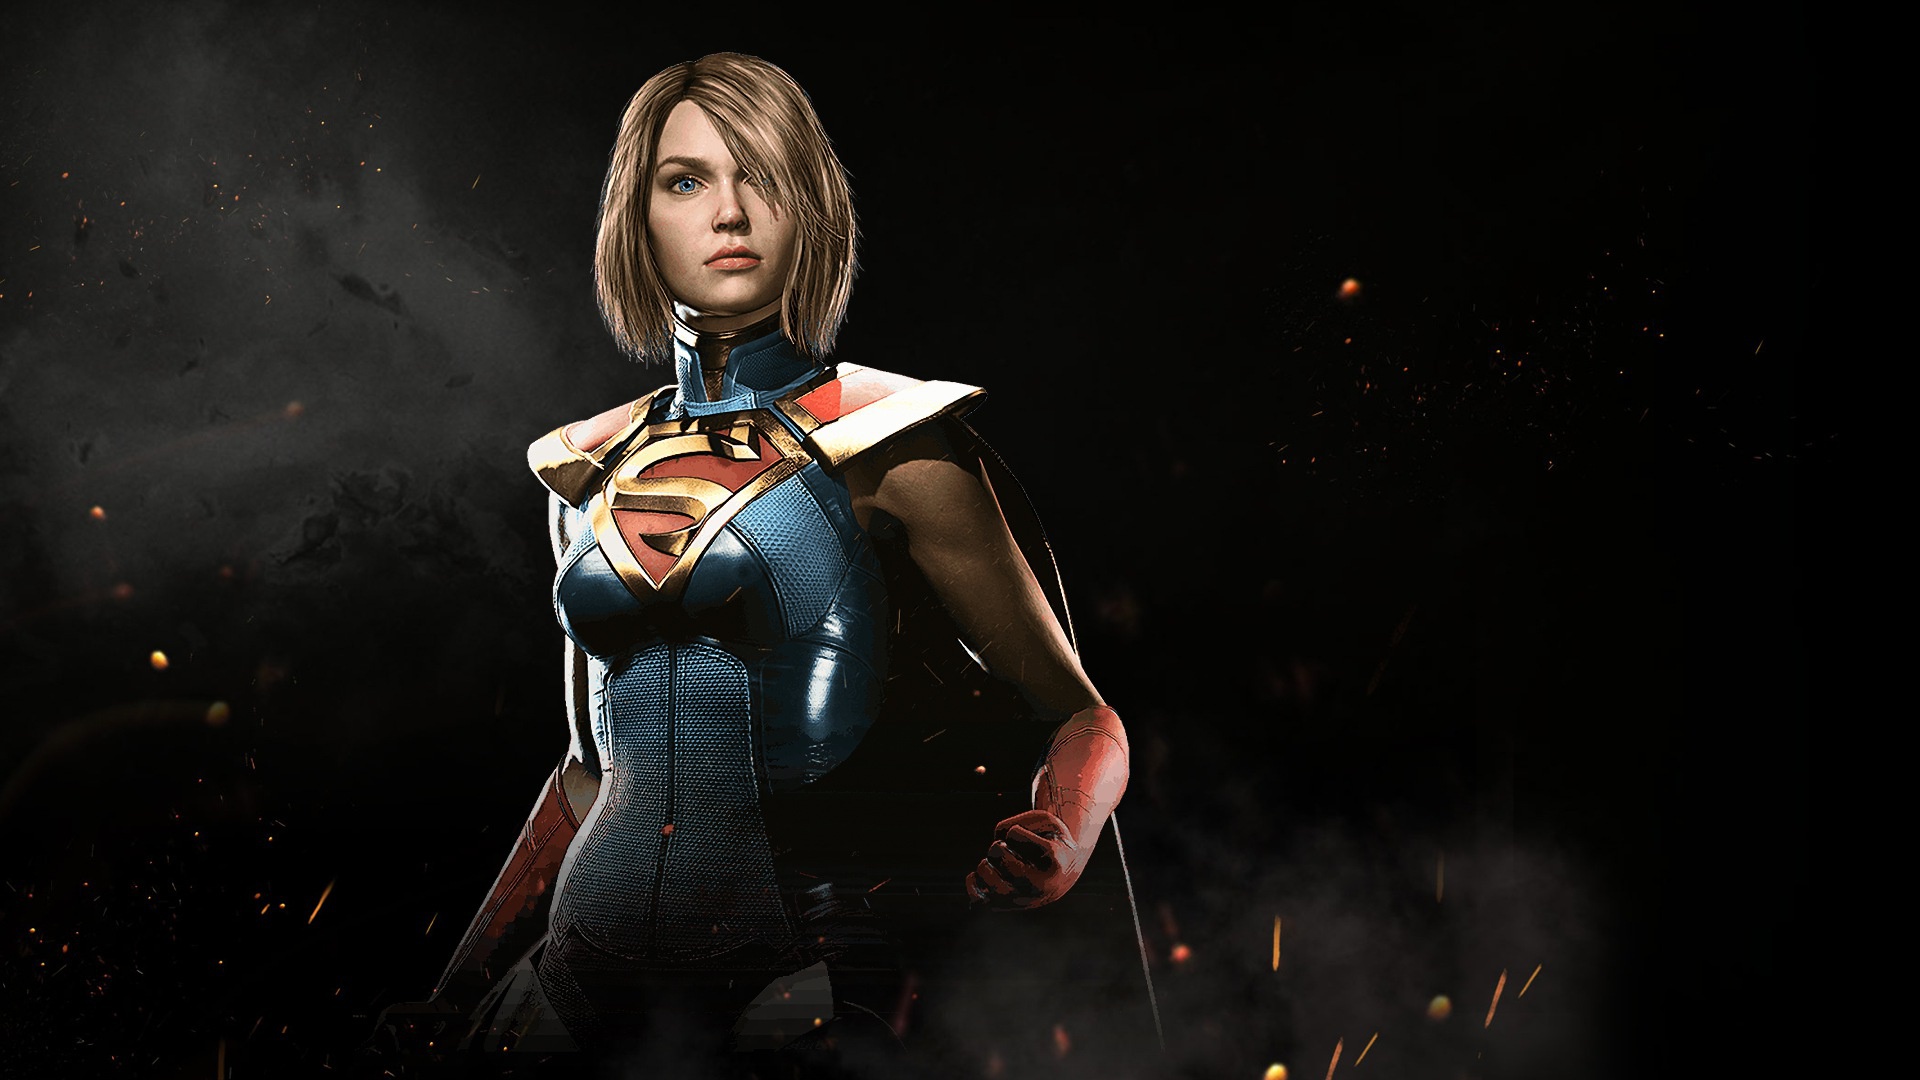 injustice, video game, injustice 2, supergirl Full HD